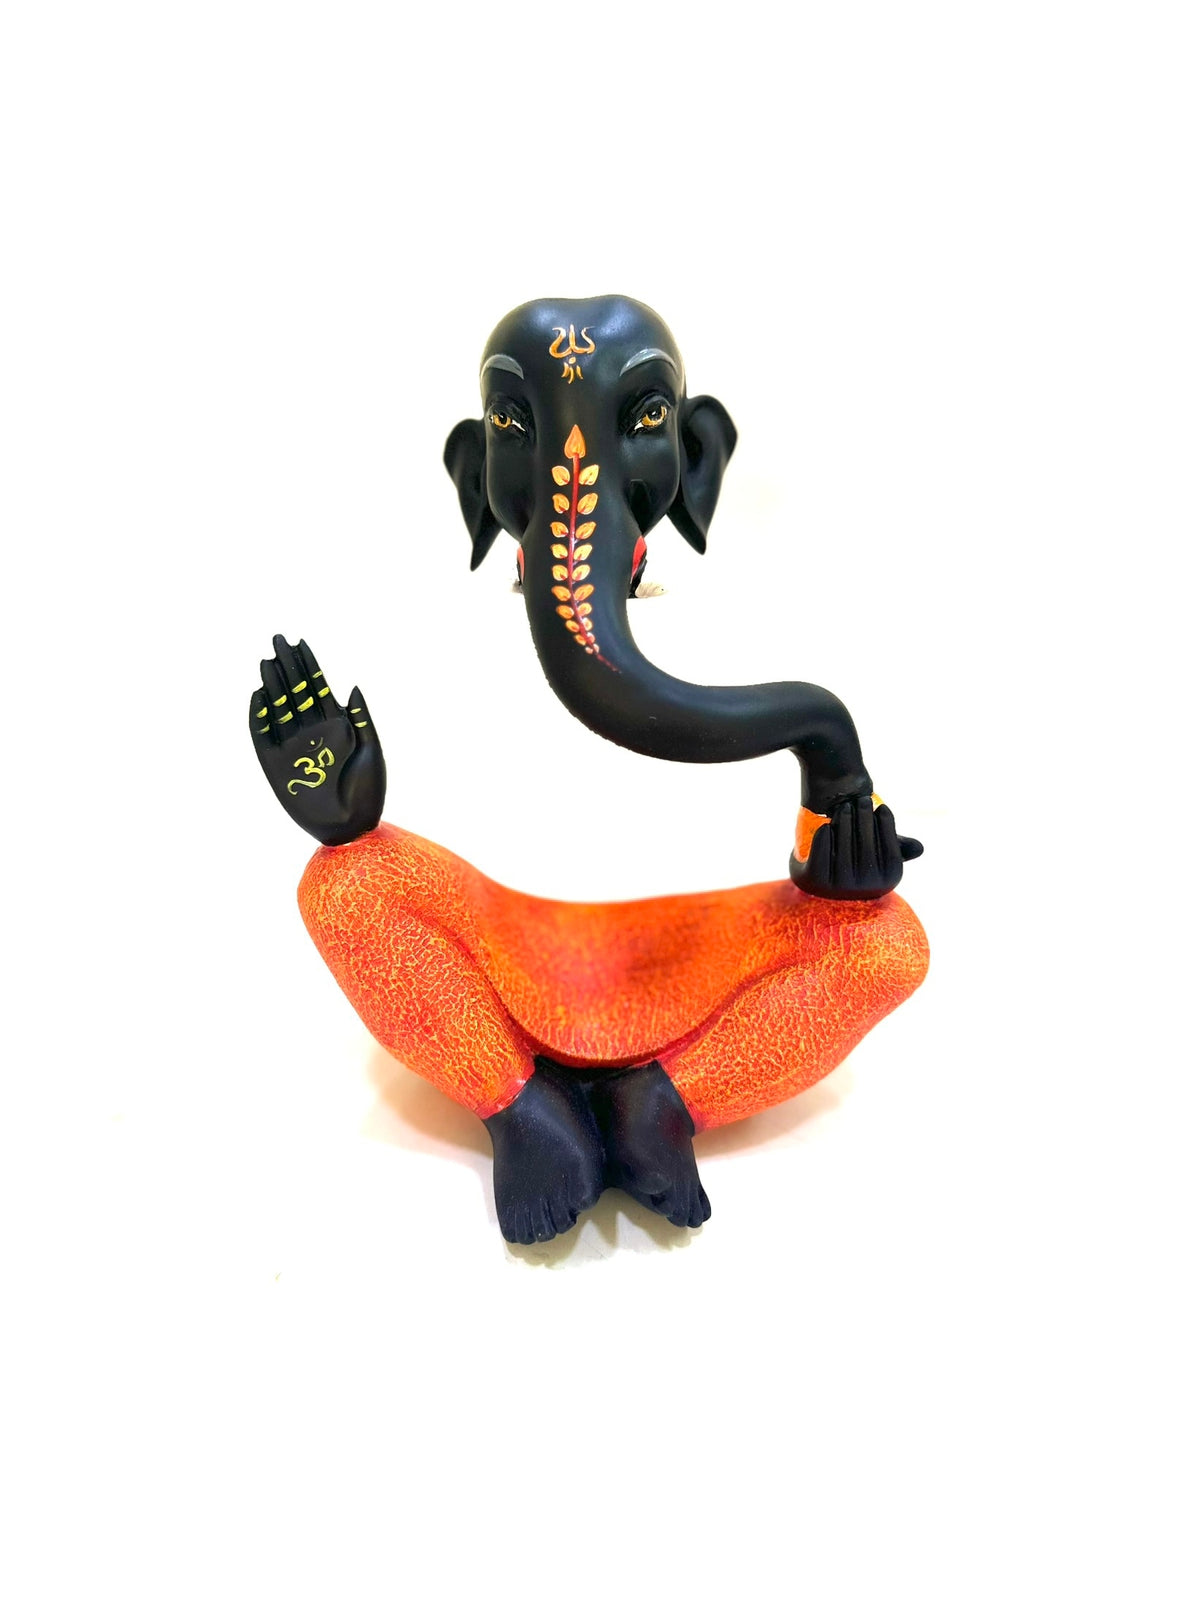 Mighty Lord Ganesha Designed In Resin Black Unique Concept At Tamrapatra - Tamrapatra